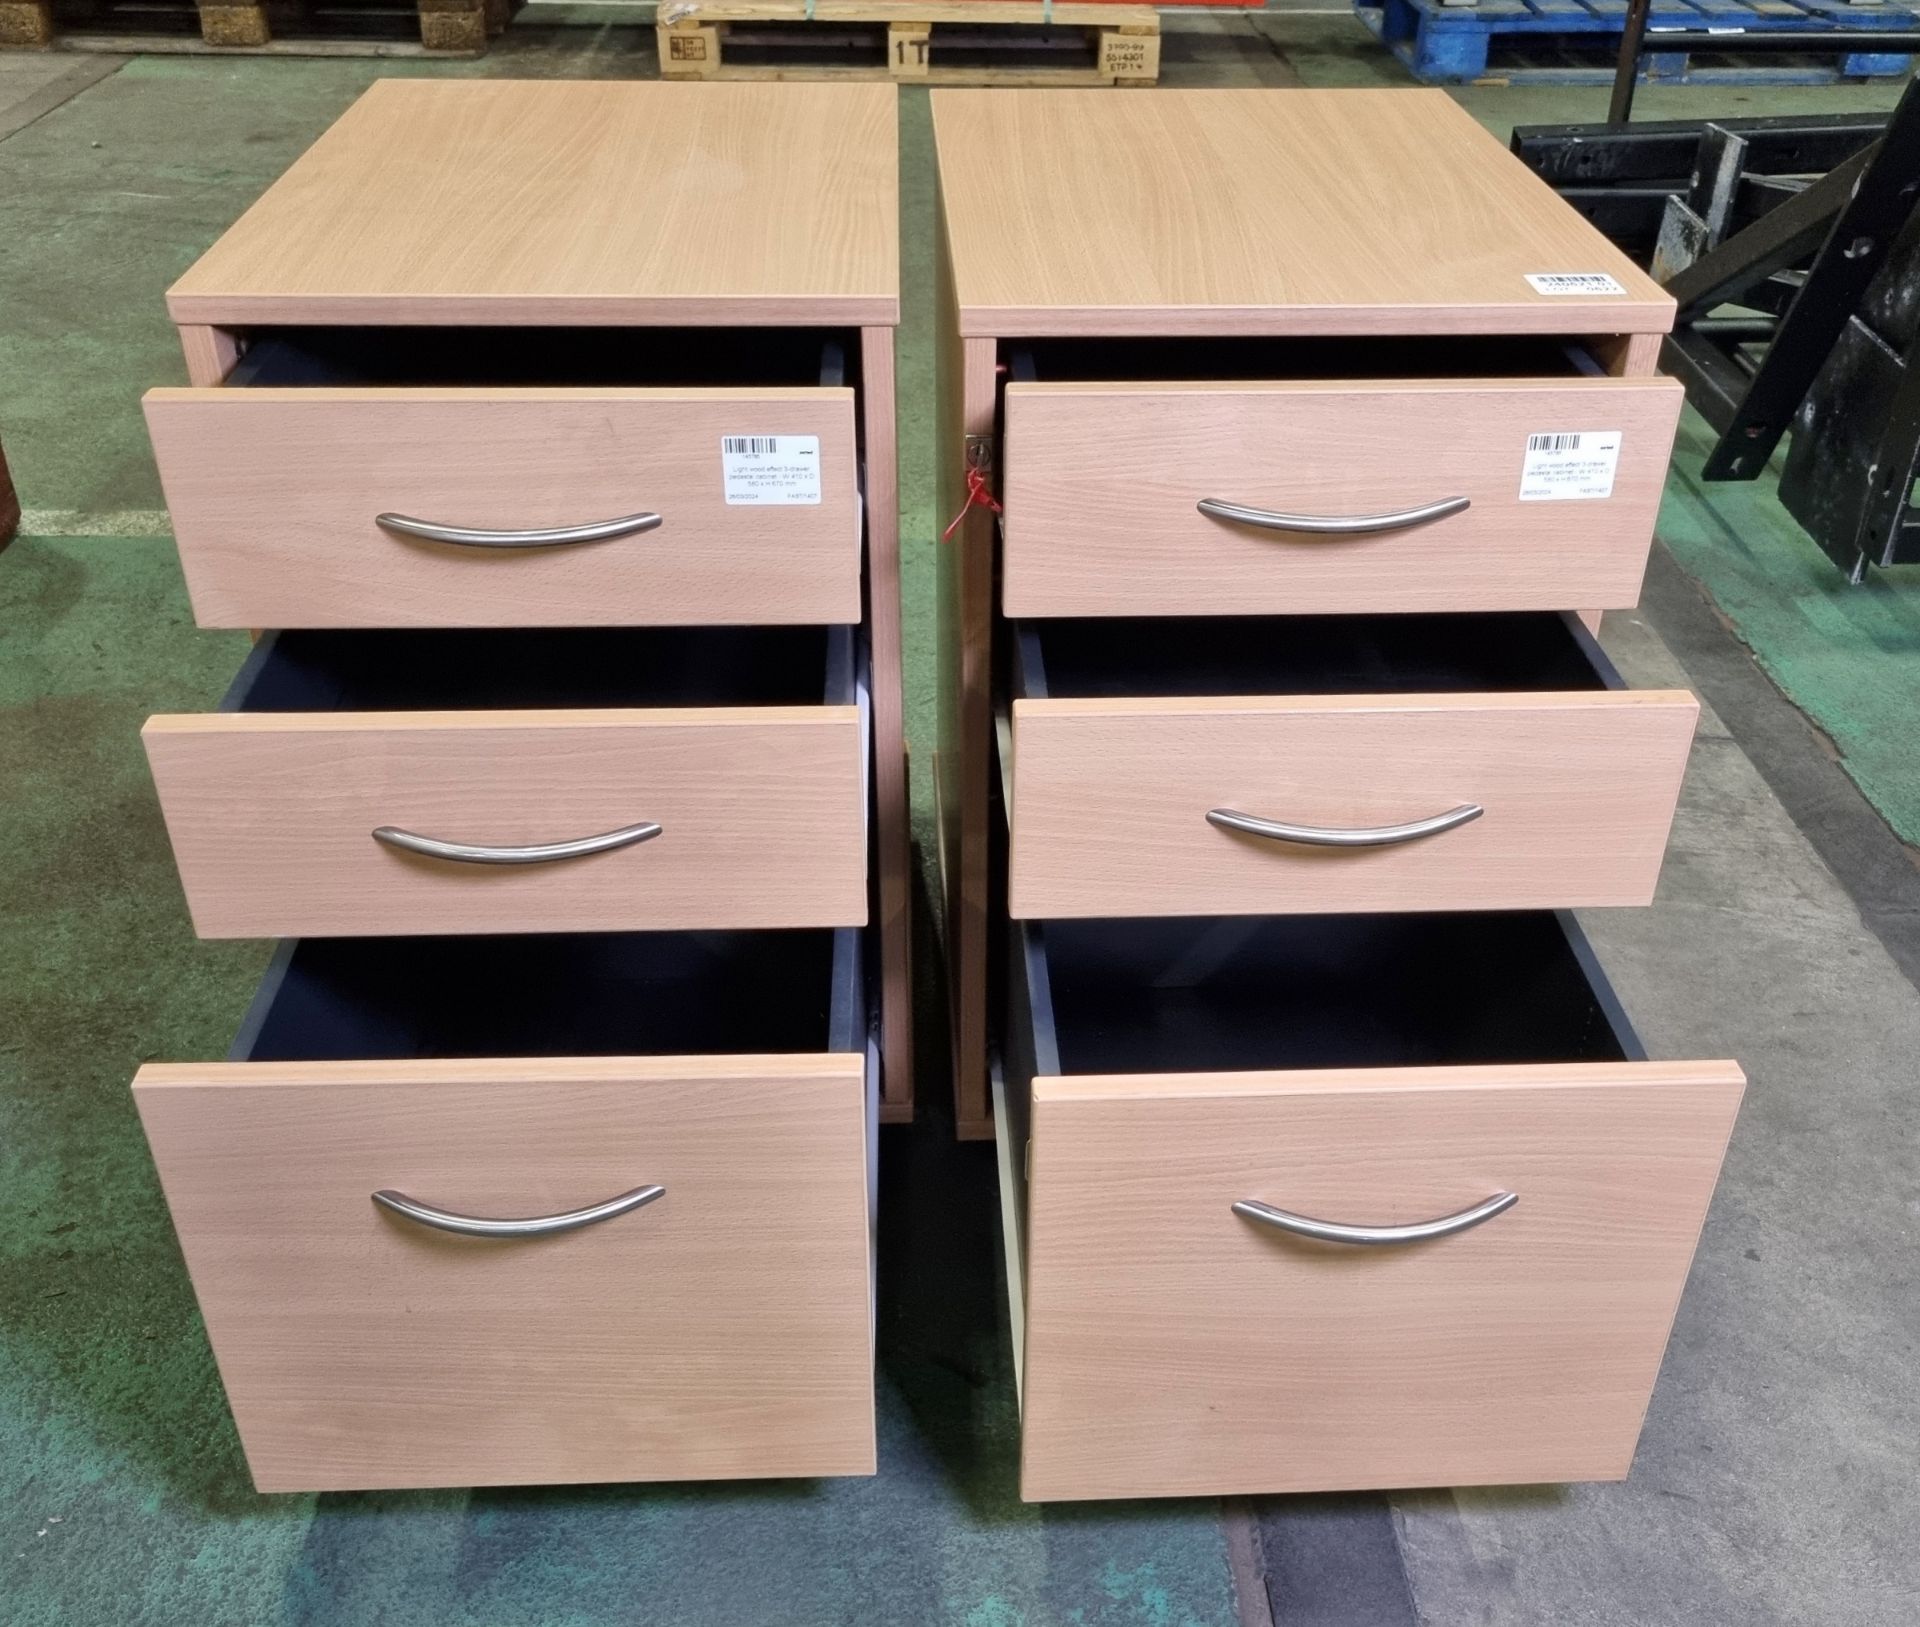 2x Light wood effect 3-drawer pedestal cabinets - W 410 x D 580 x H 670mm - Image 3 of 4